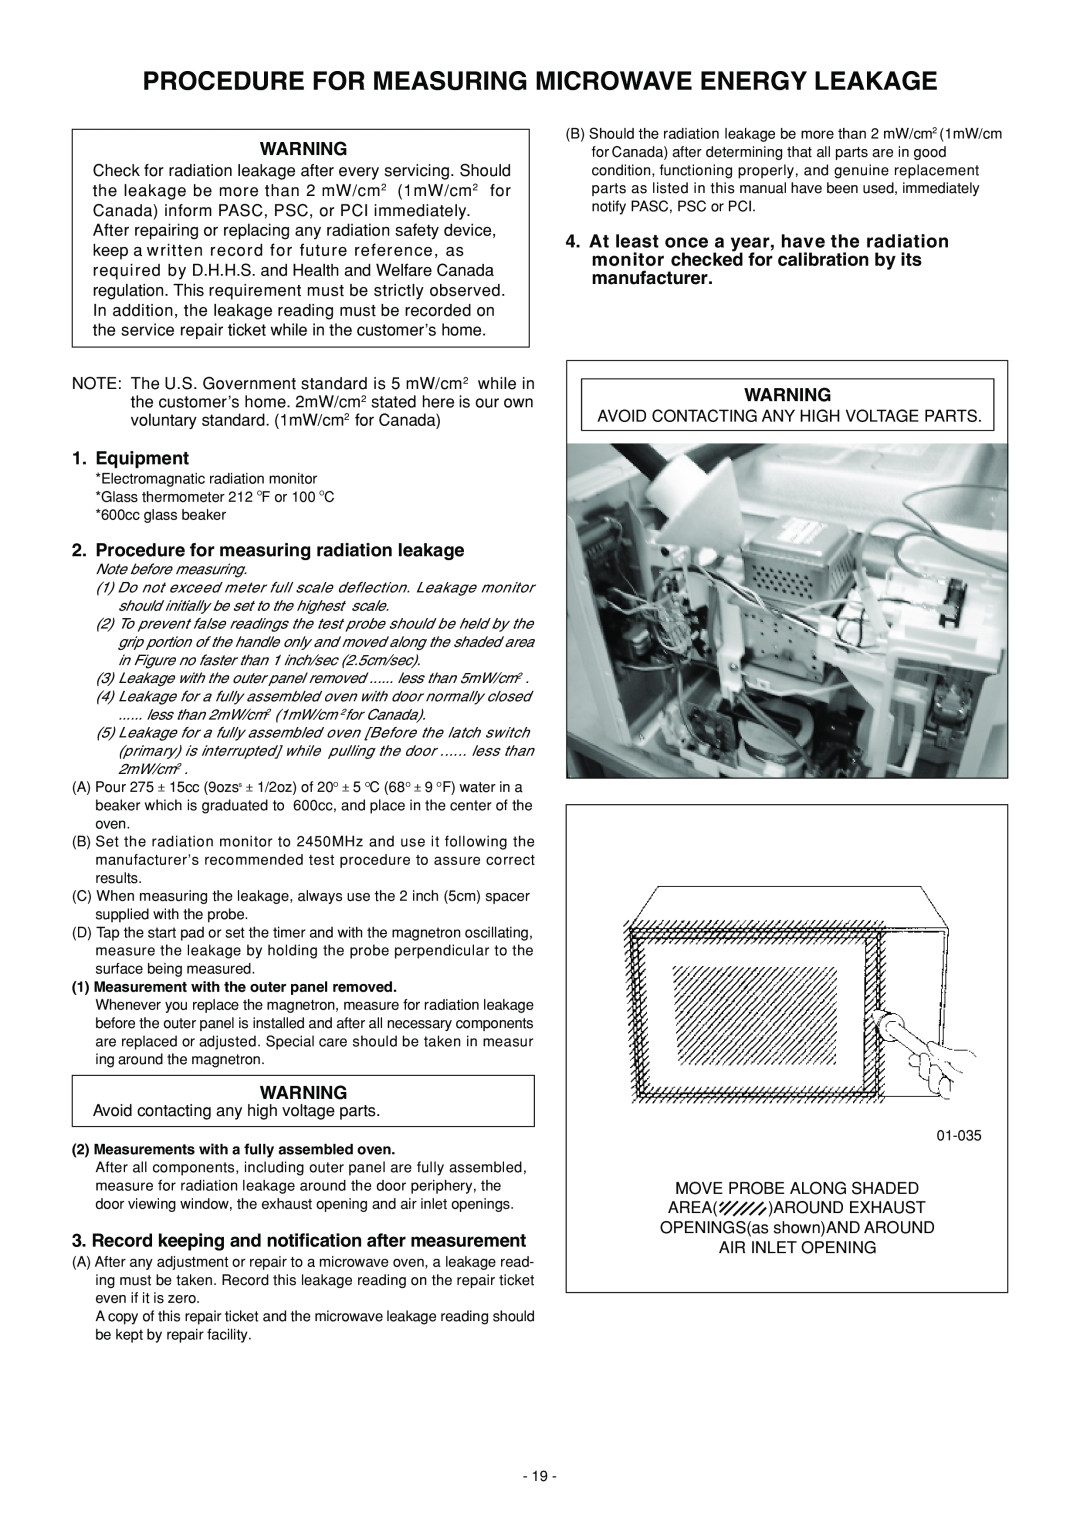 Panasonic NN-L530BF Procedure For Measuring Microwave Energy Leakage, Equipment, Procedure for measuring radiation leakage 